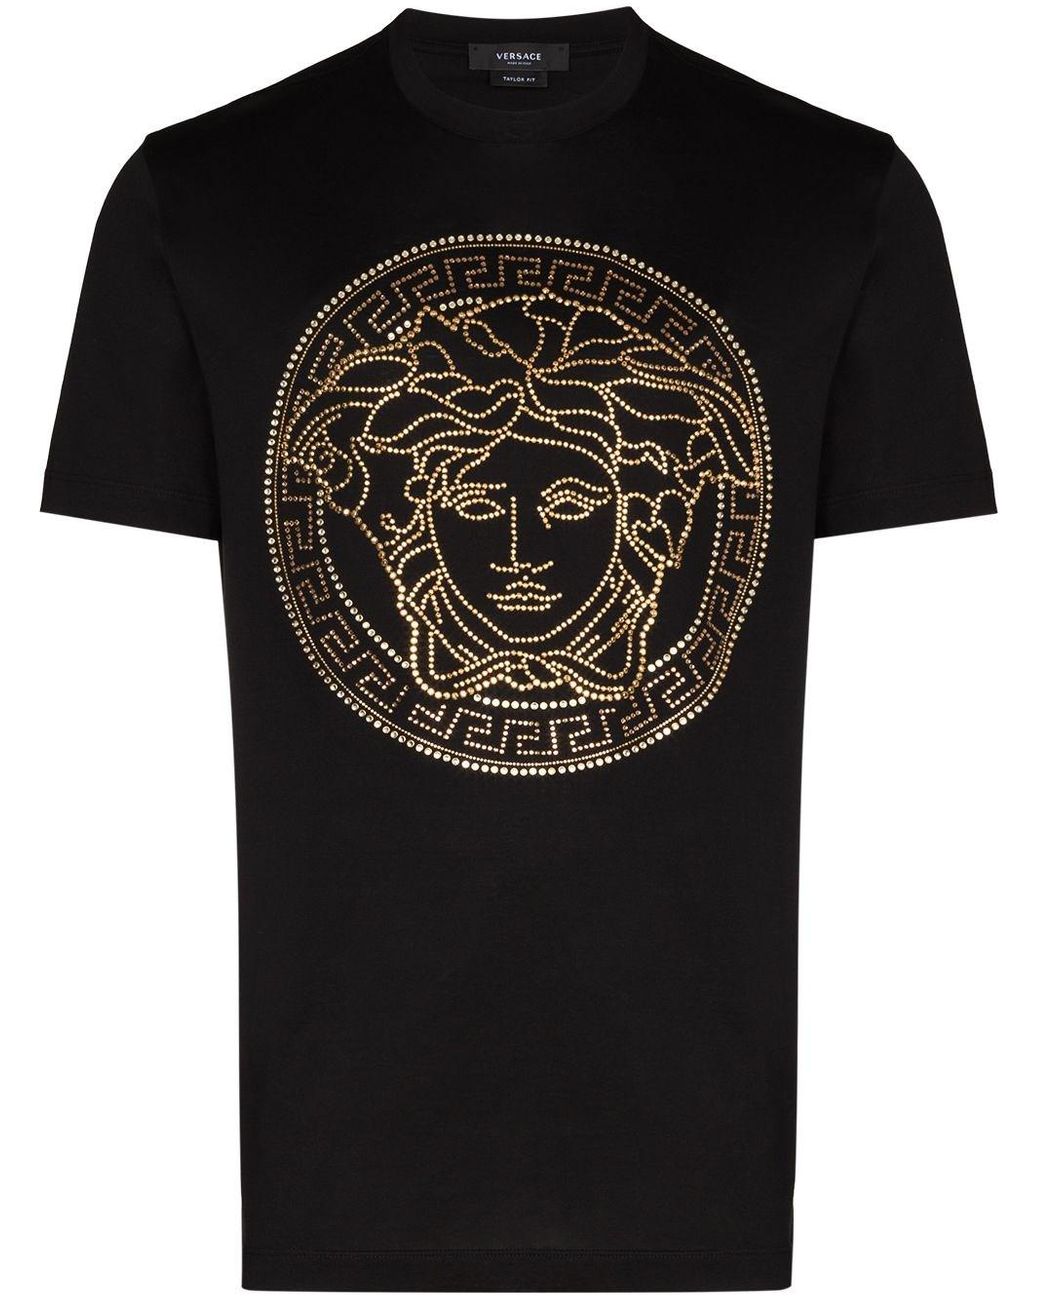 Versace Logo T-shirt in Black for Men - Lyst